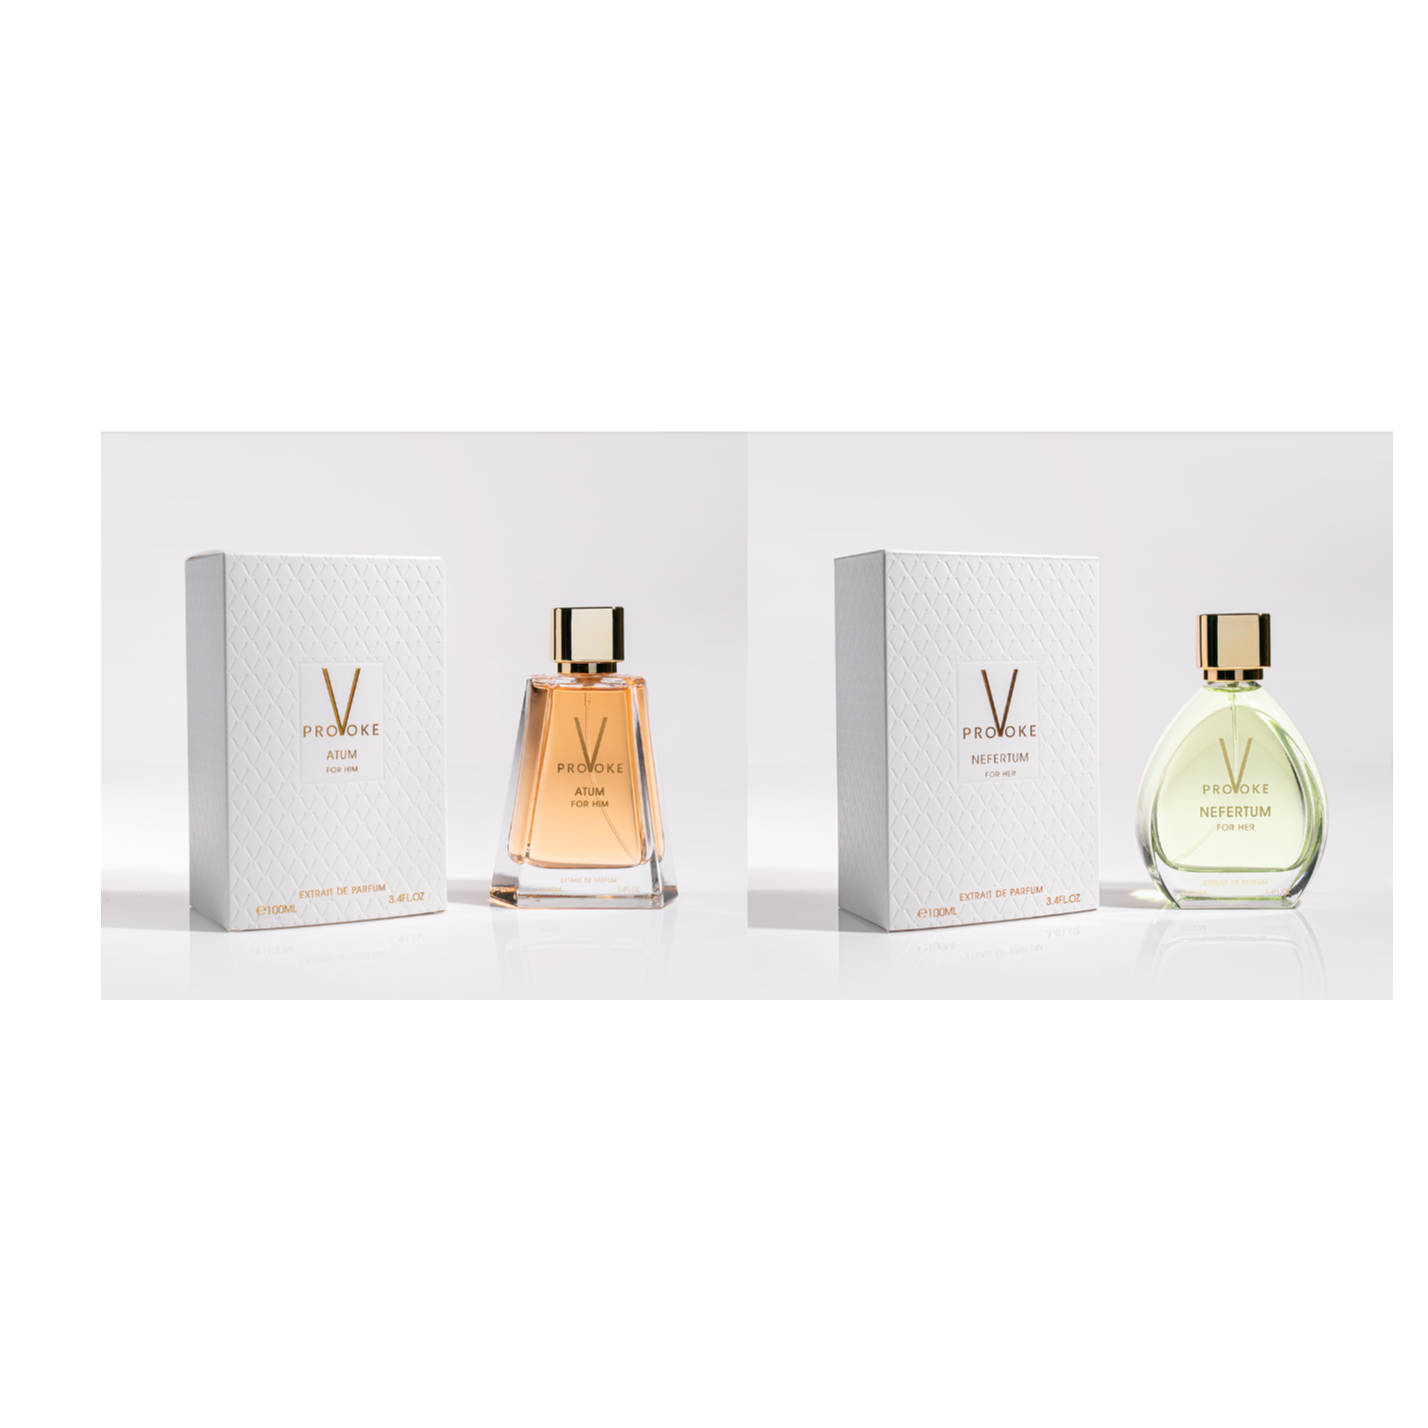 Perfume (PROVOKE EXCLUSIVE) Exporters, Wholesaler & Manufacturer | Globaltradeplaza.com